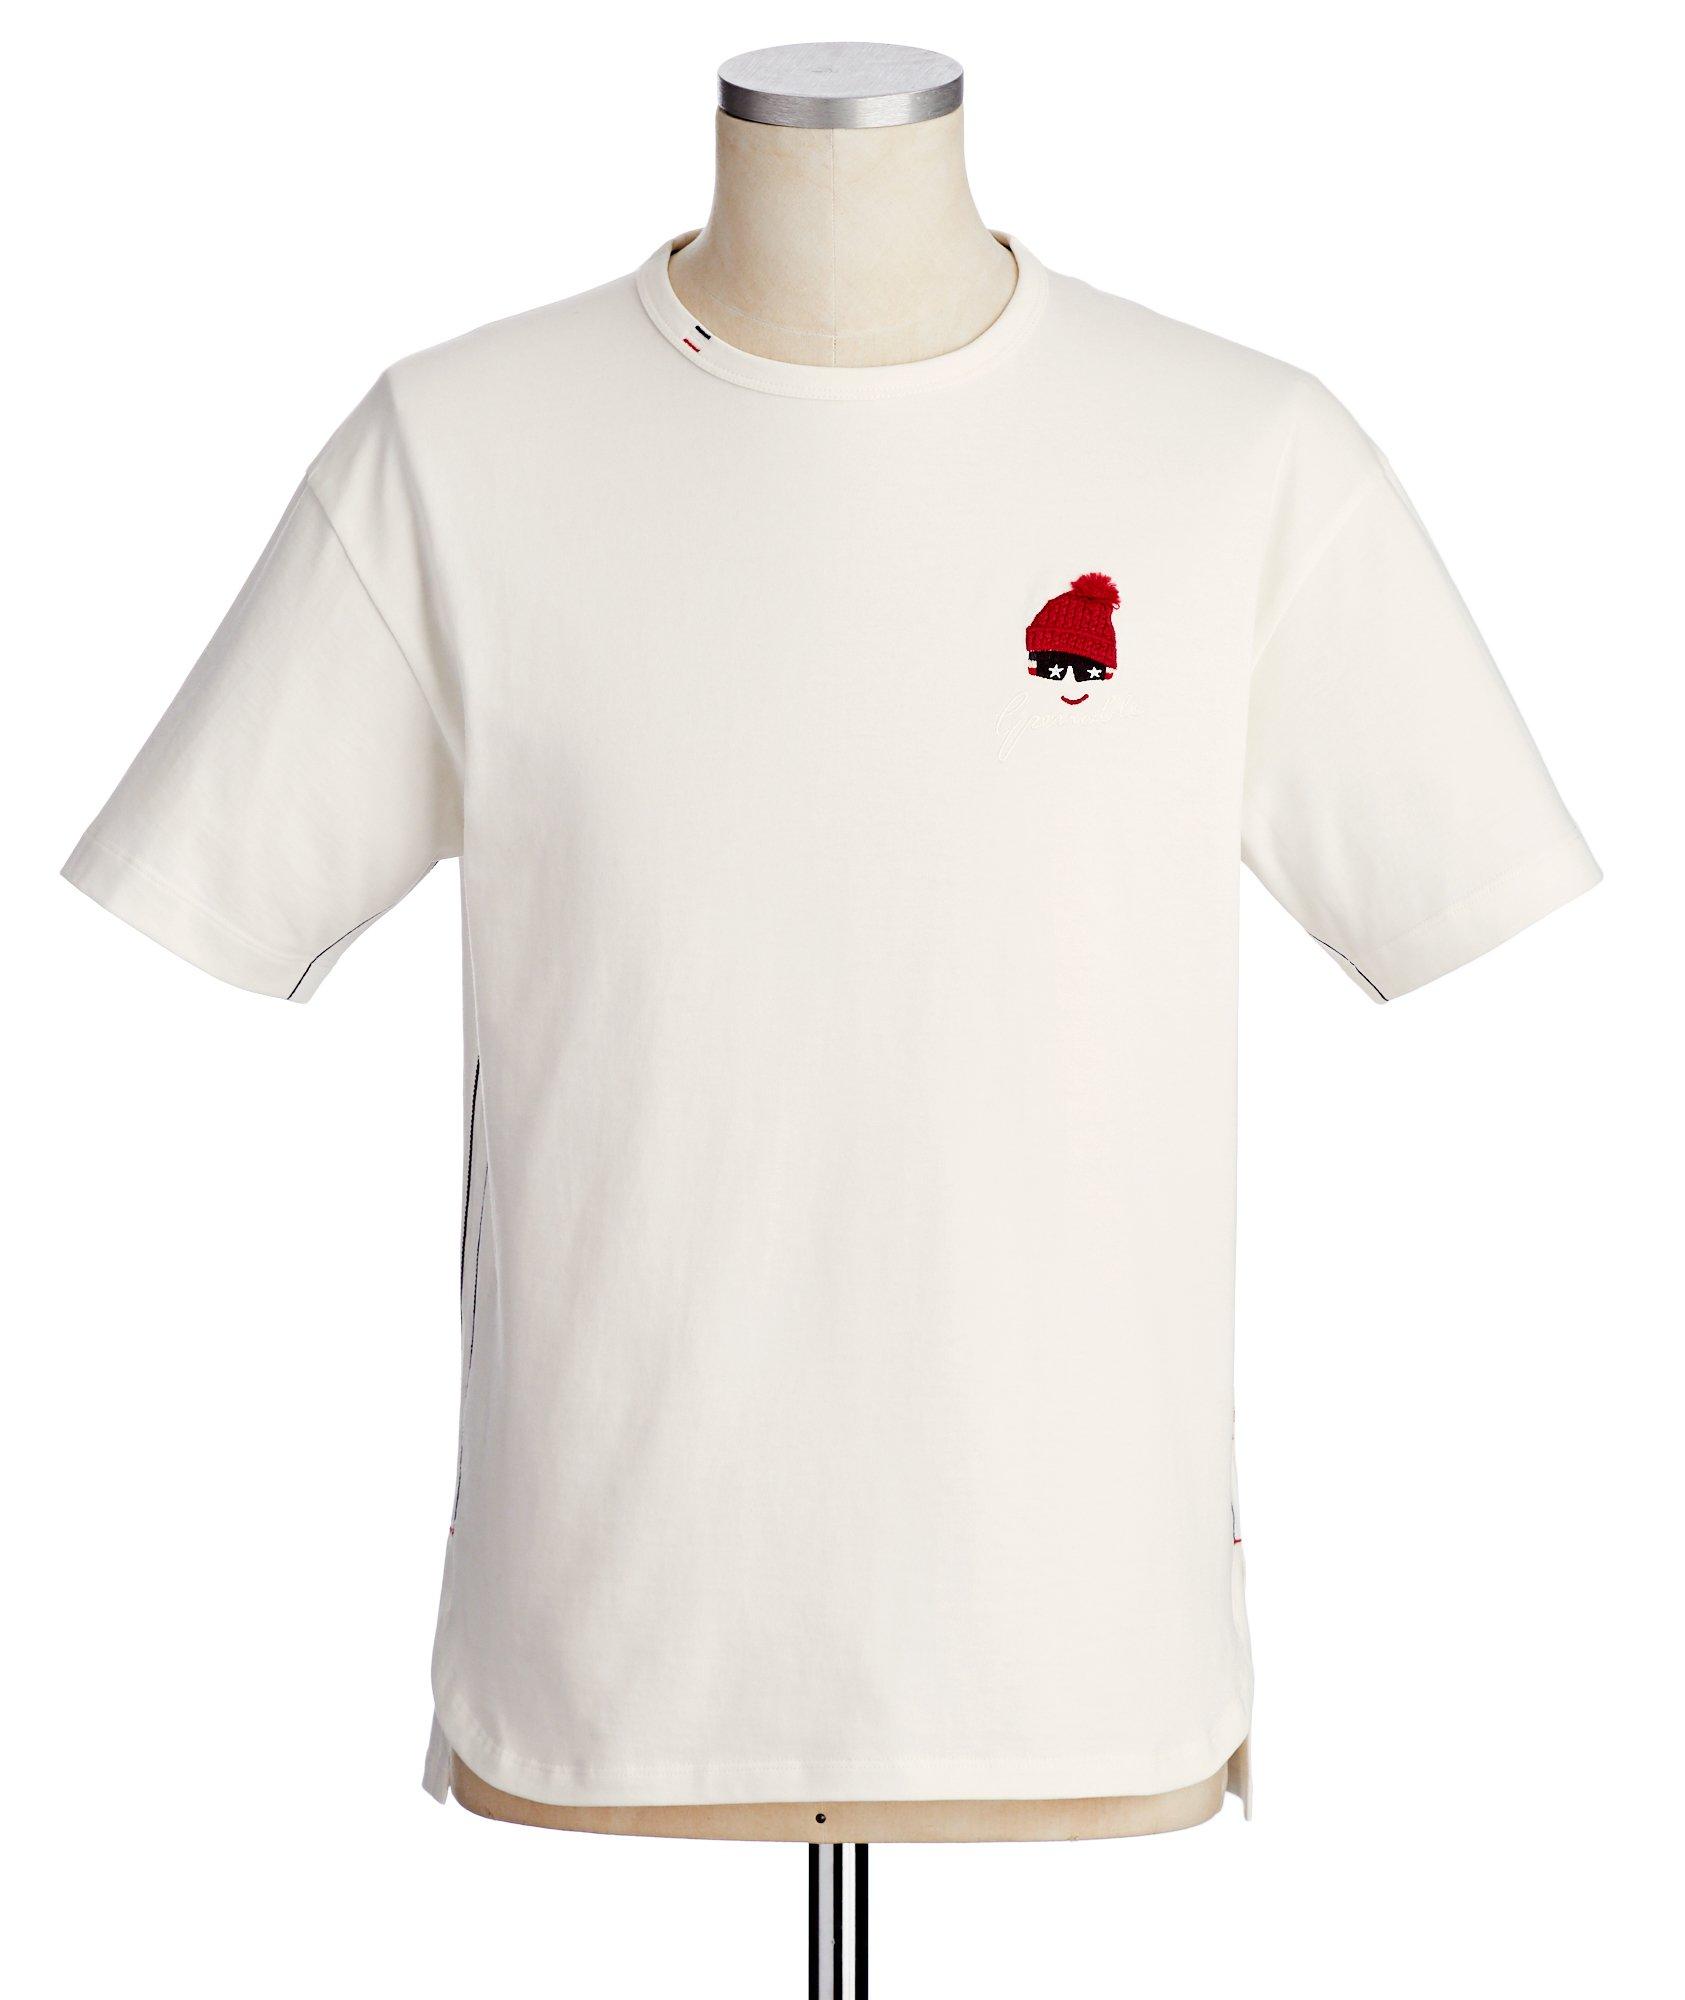 T-shirt avec image alpine brodée image 0